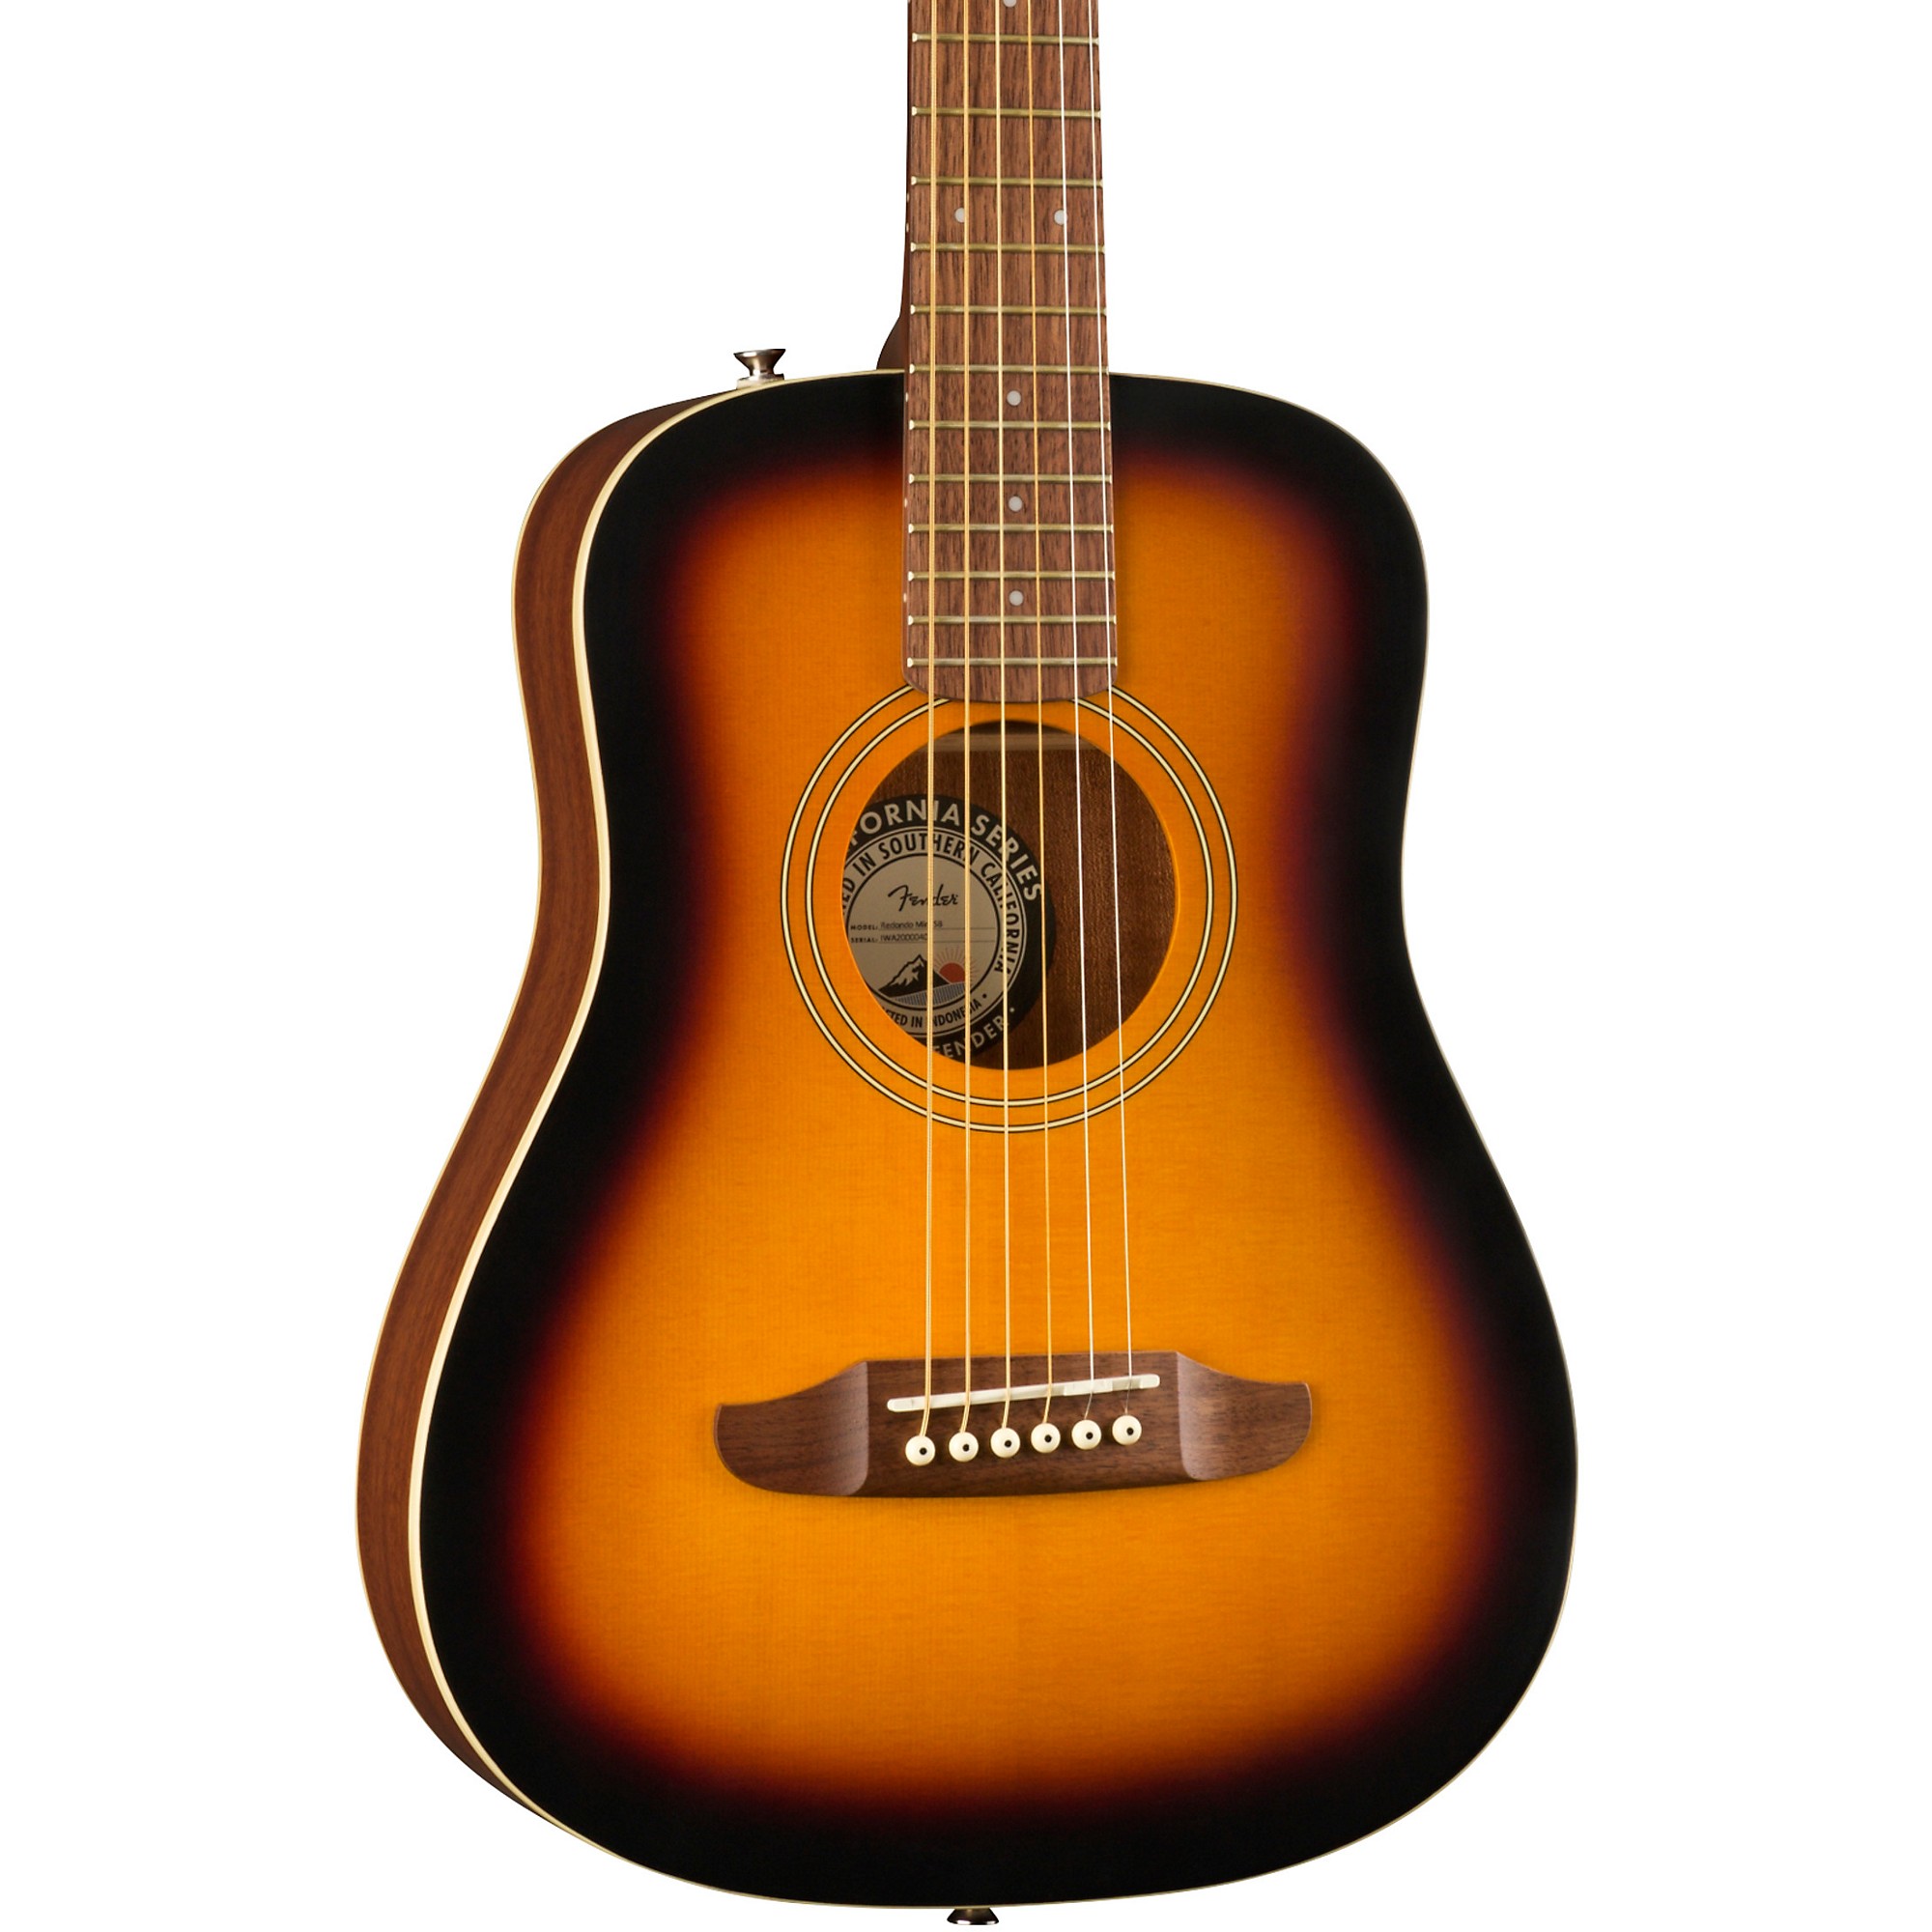 Акустическая гитара Fender Redondo Mini Sunburst